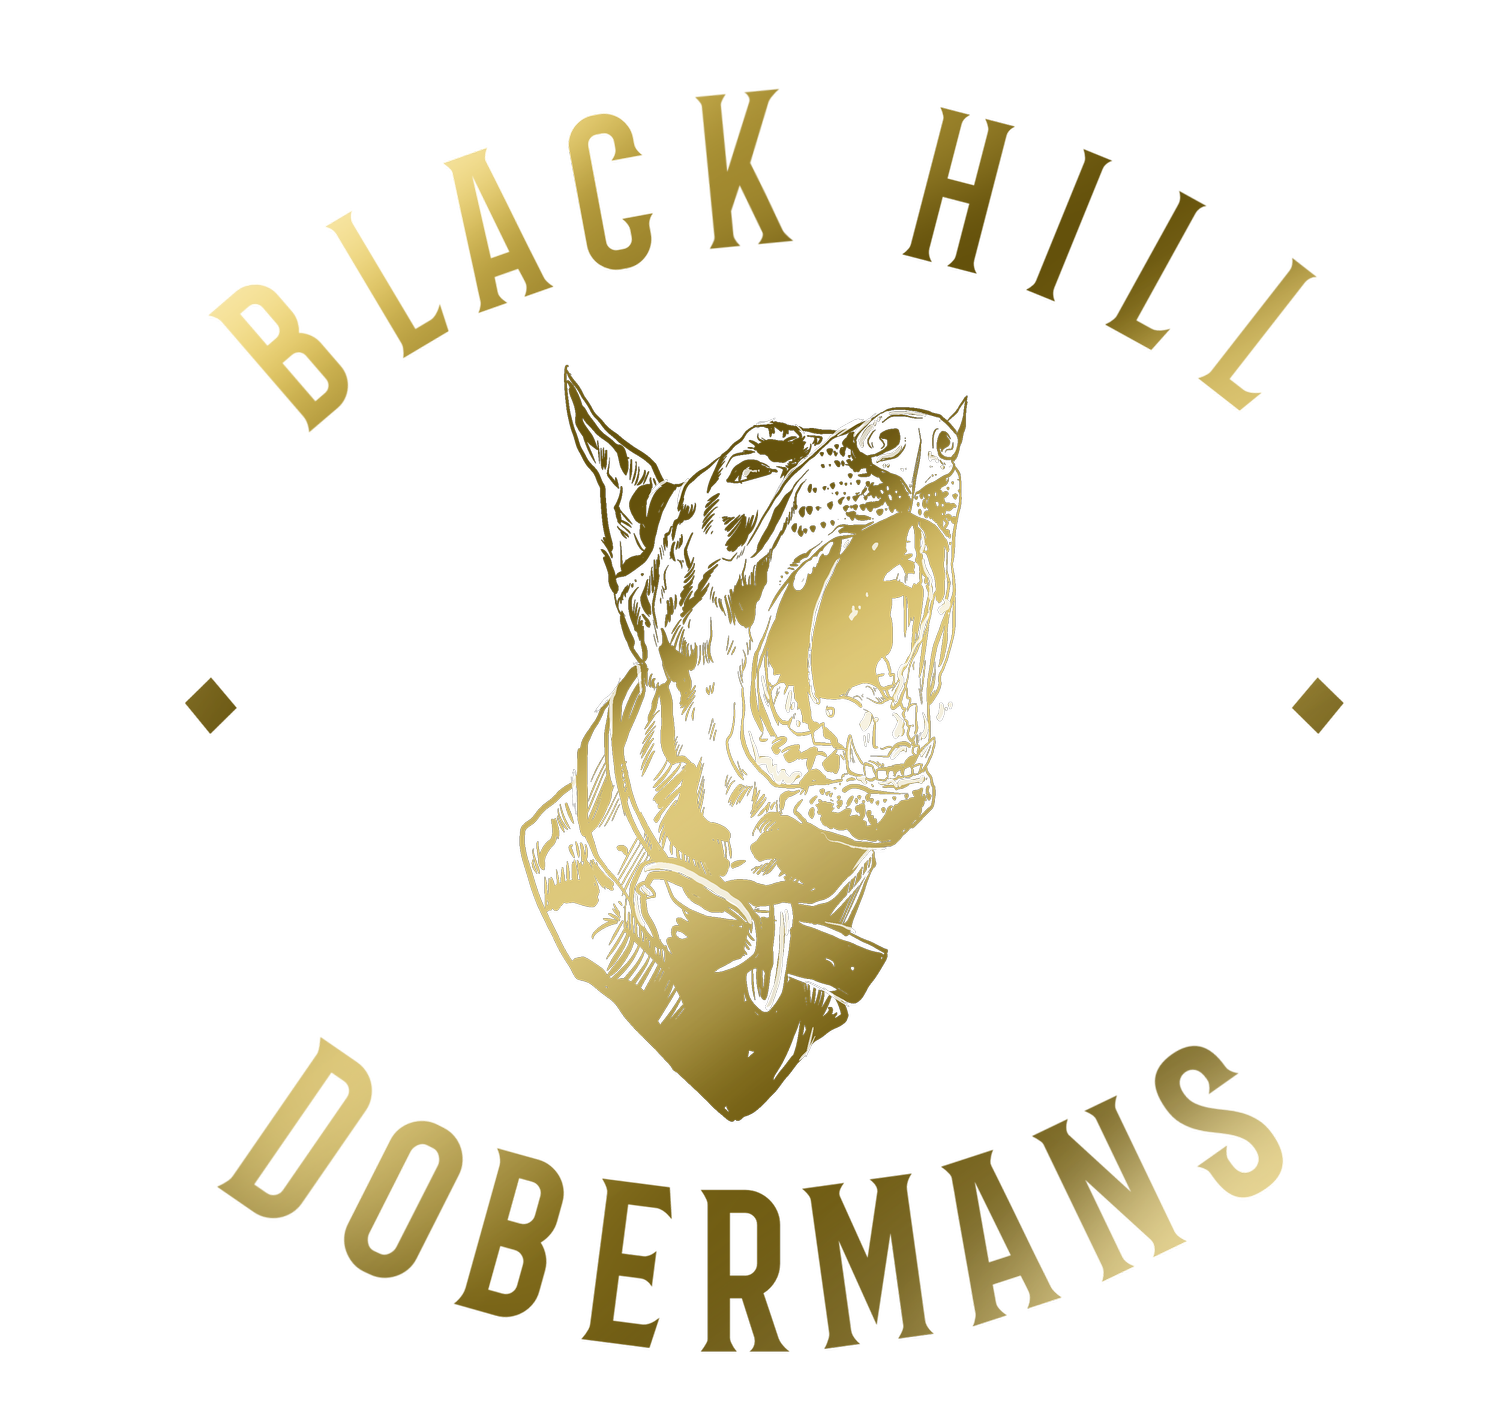 Black Hill Dobermans